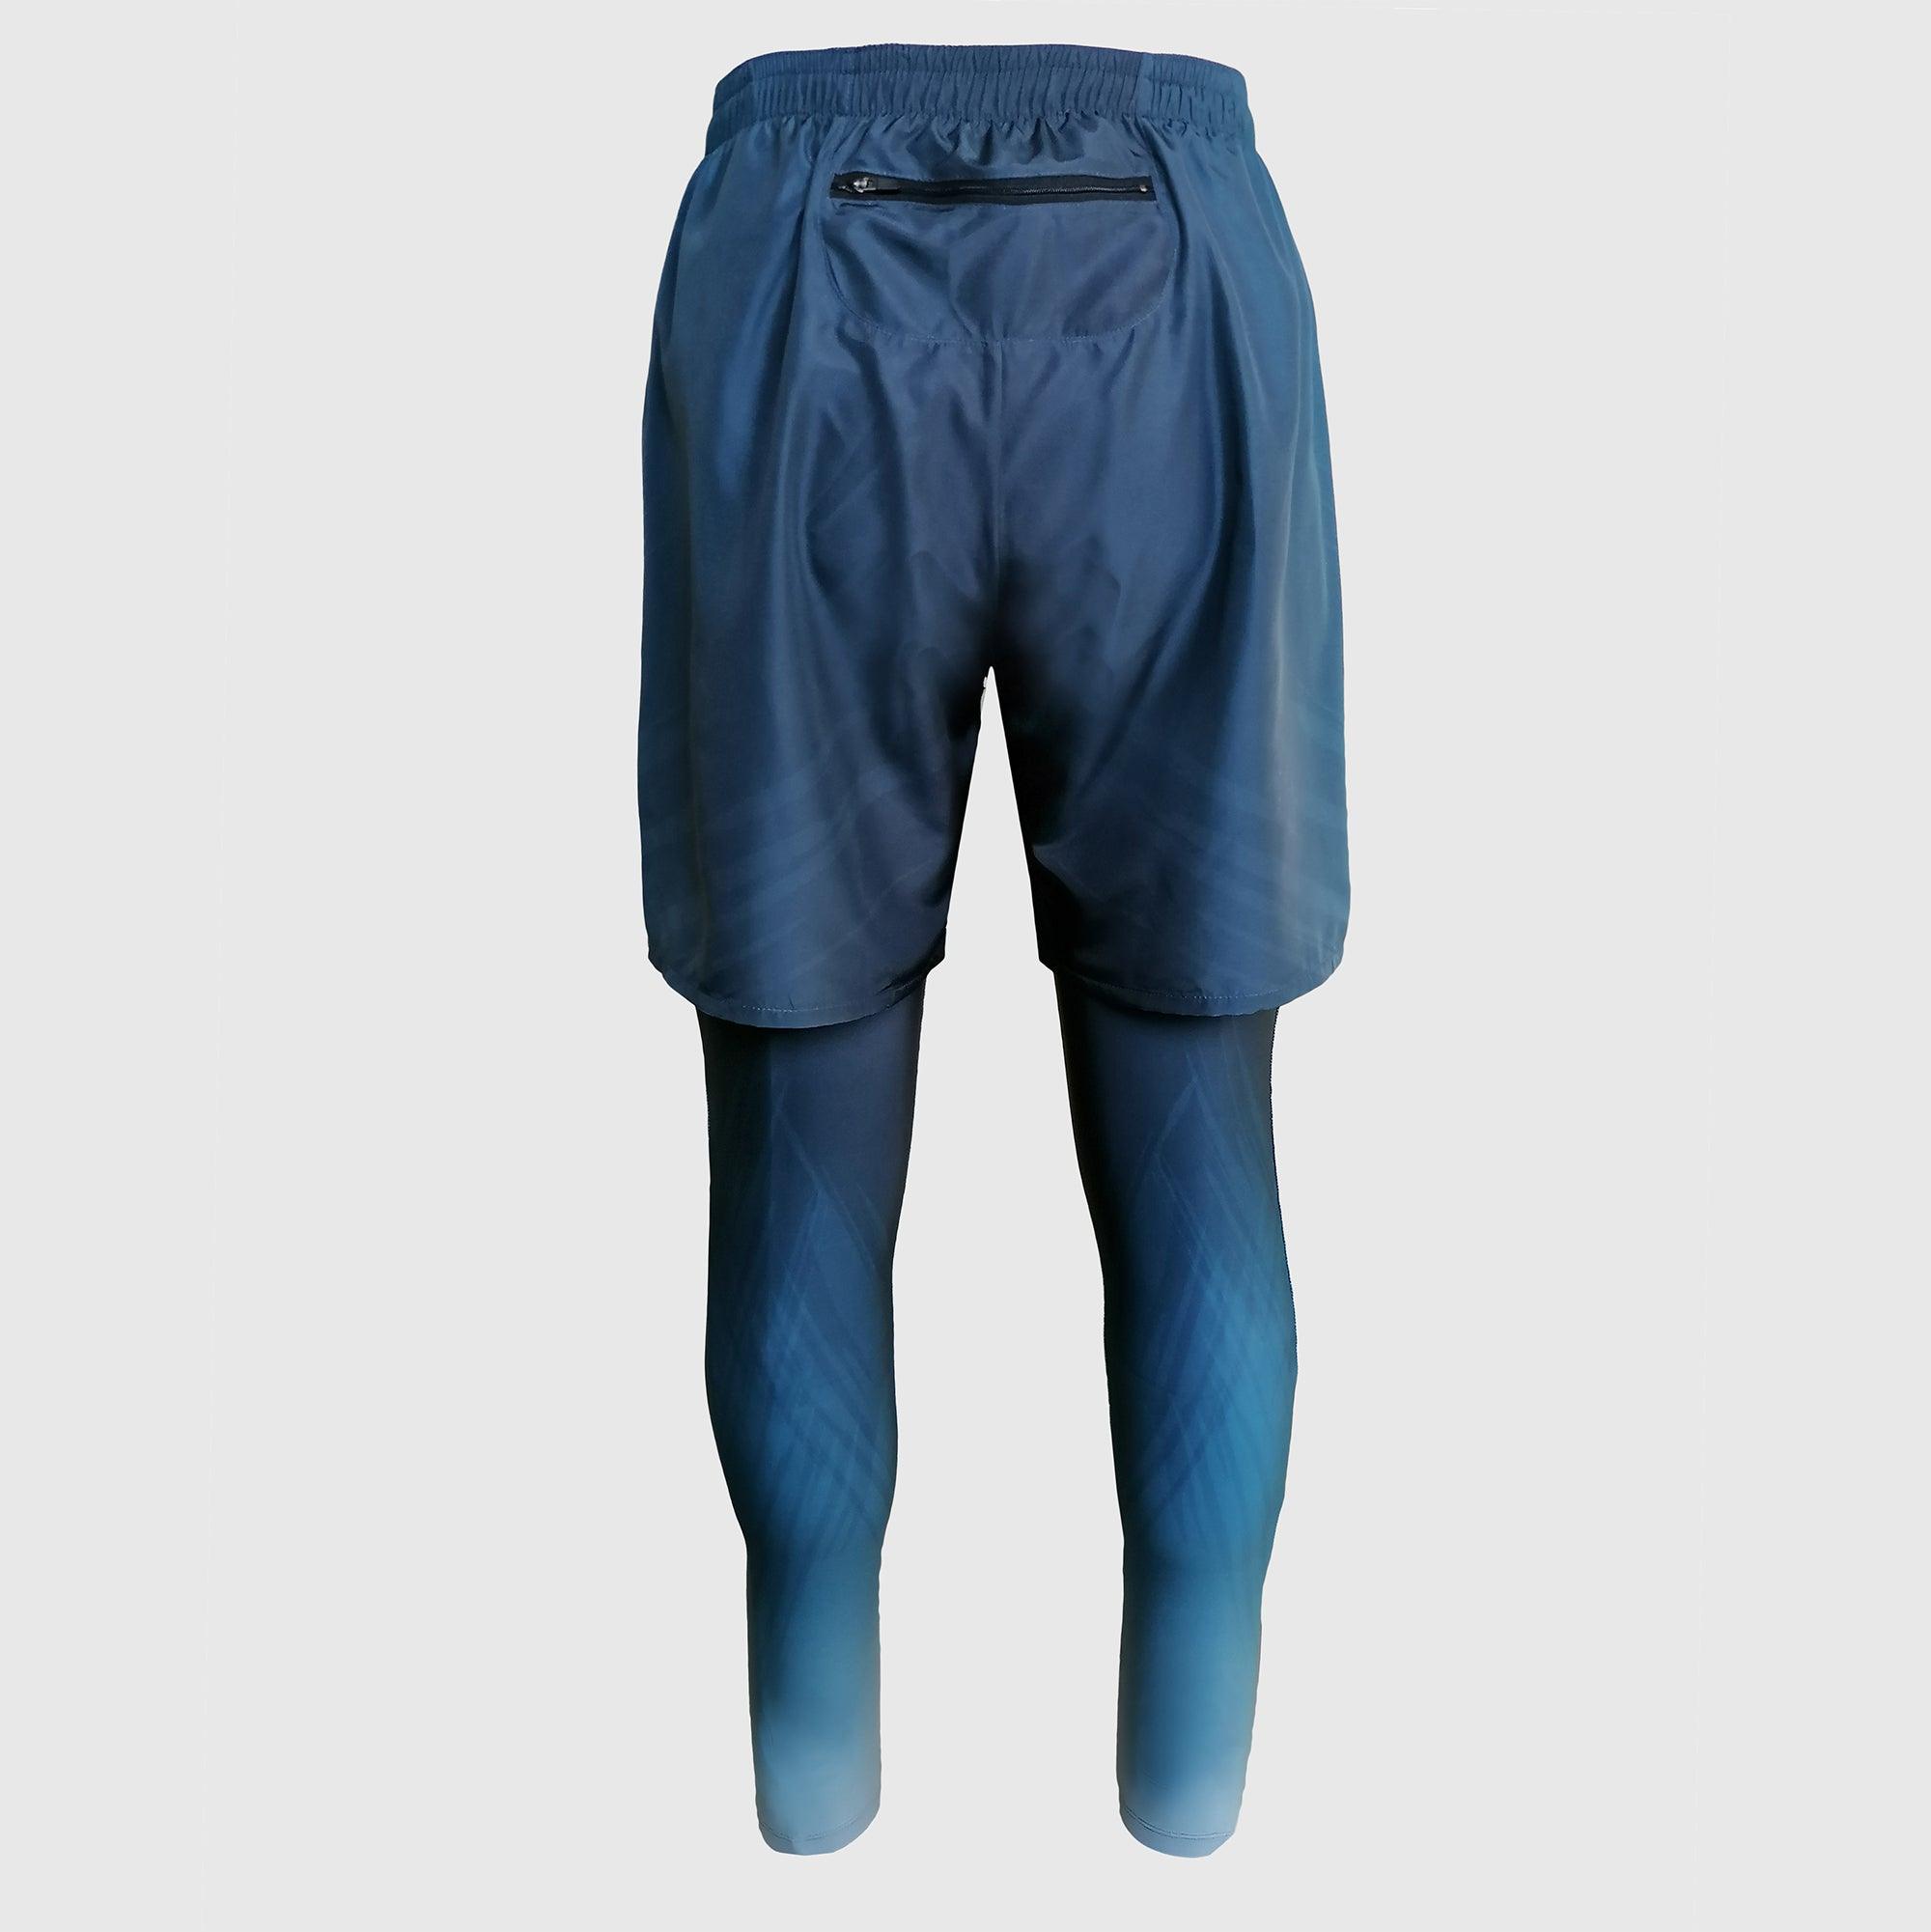 SEASUM Men's Joggers Sweatpants with Pockets Workout Athletic Running Pants  White L - Walmart.com